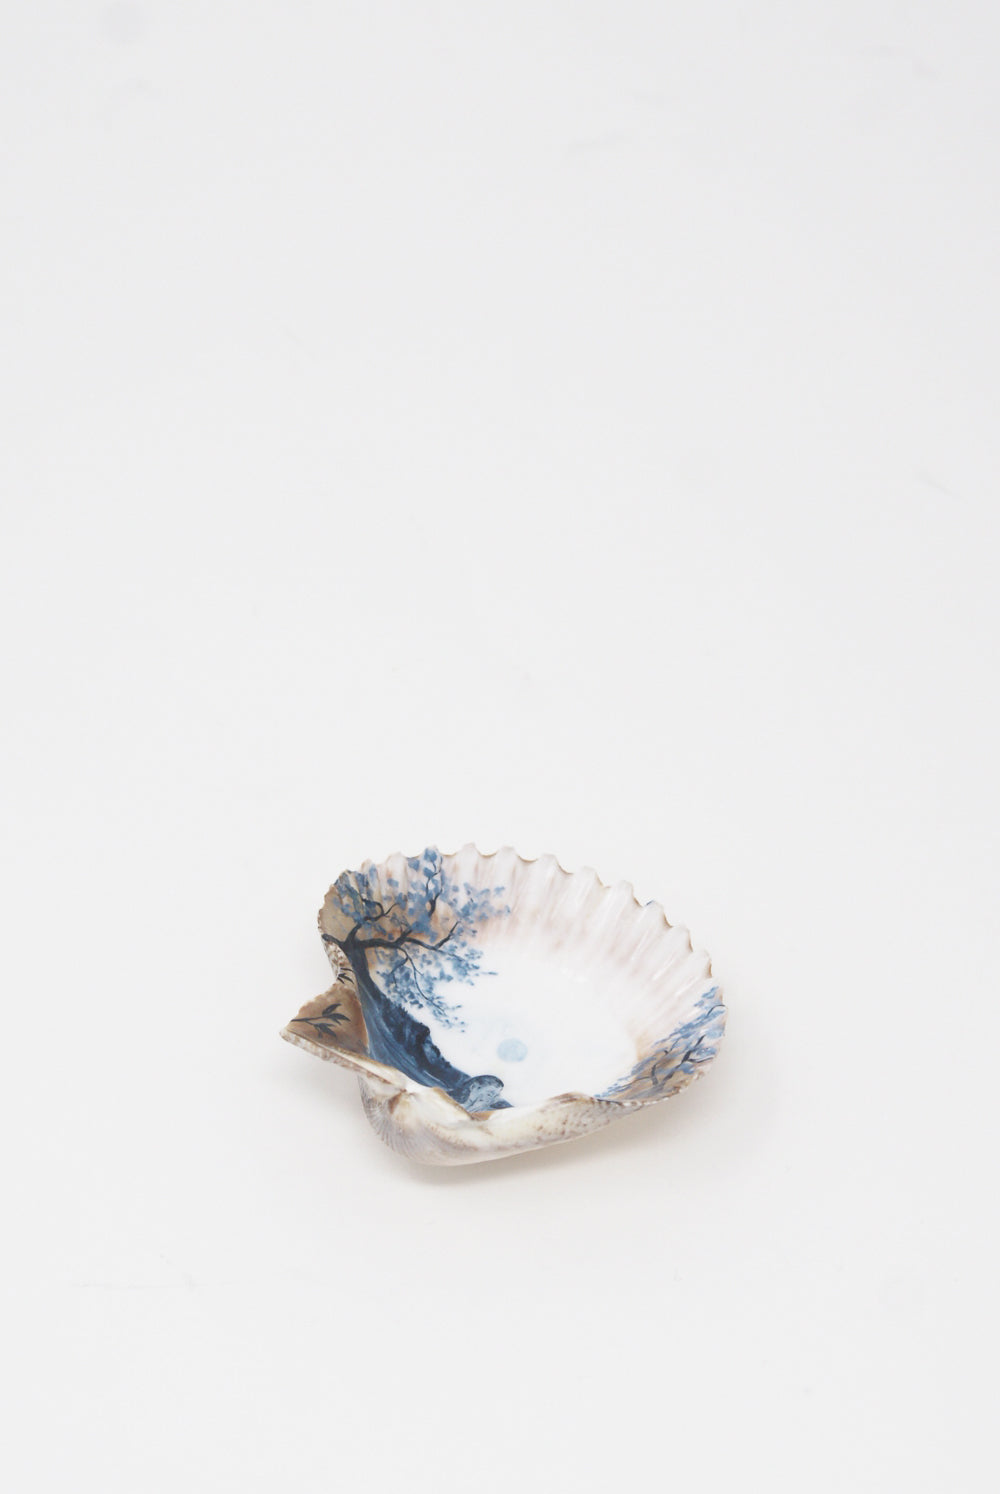 Alyssa Goodman - Hand Painted Shell in Sunset